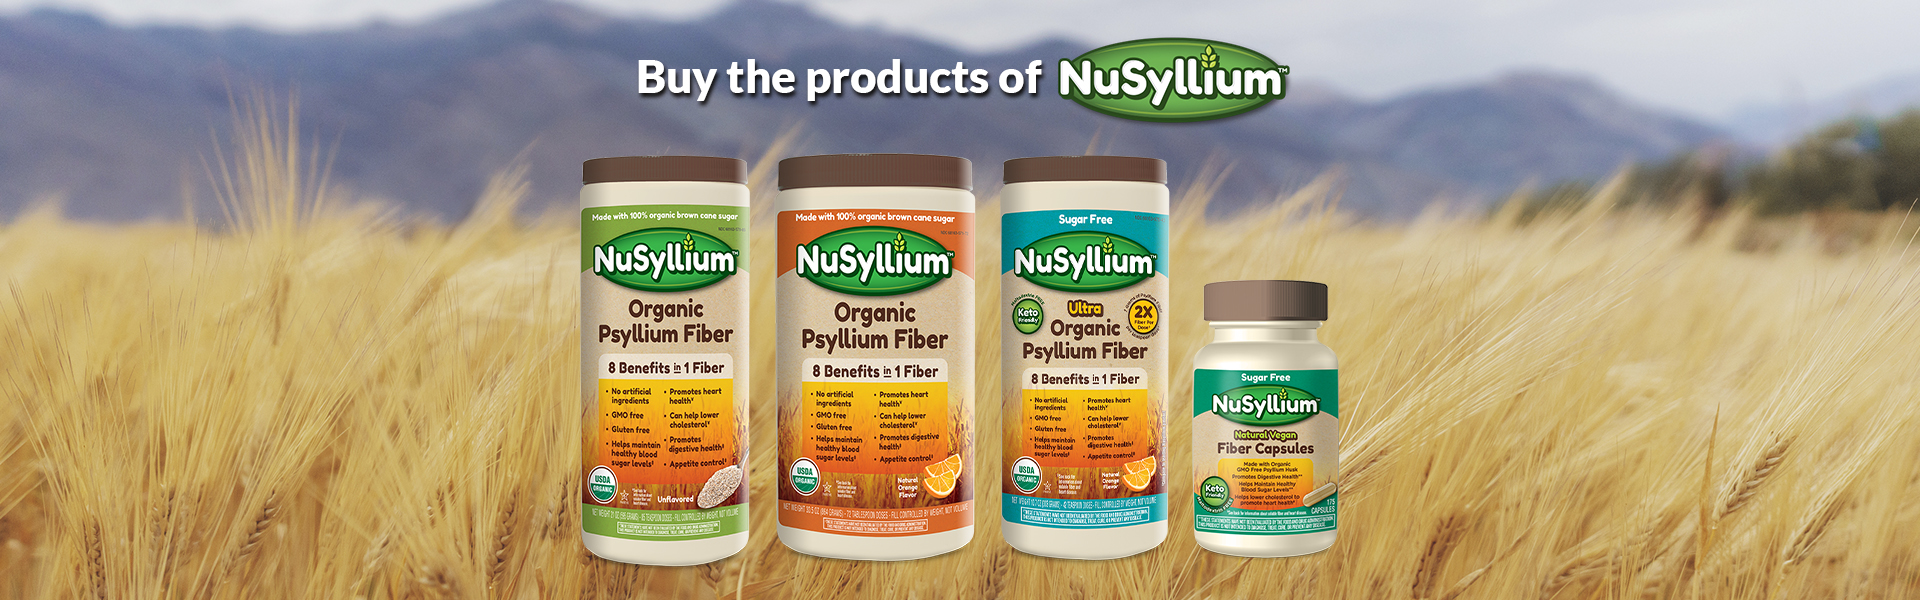 Lifelab_banner_products_nusyllium